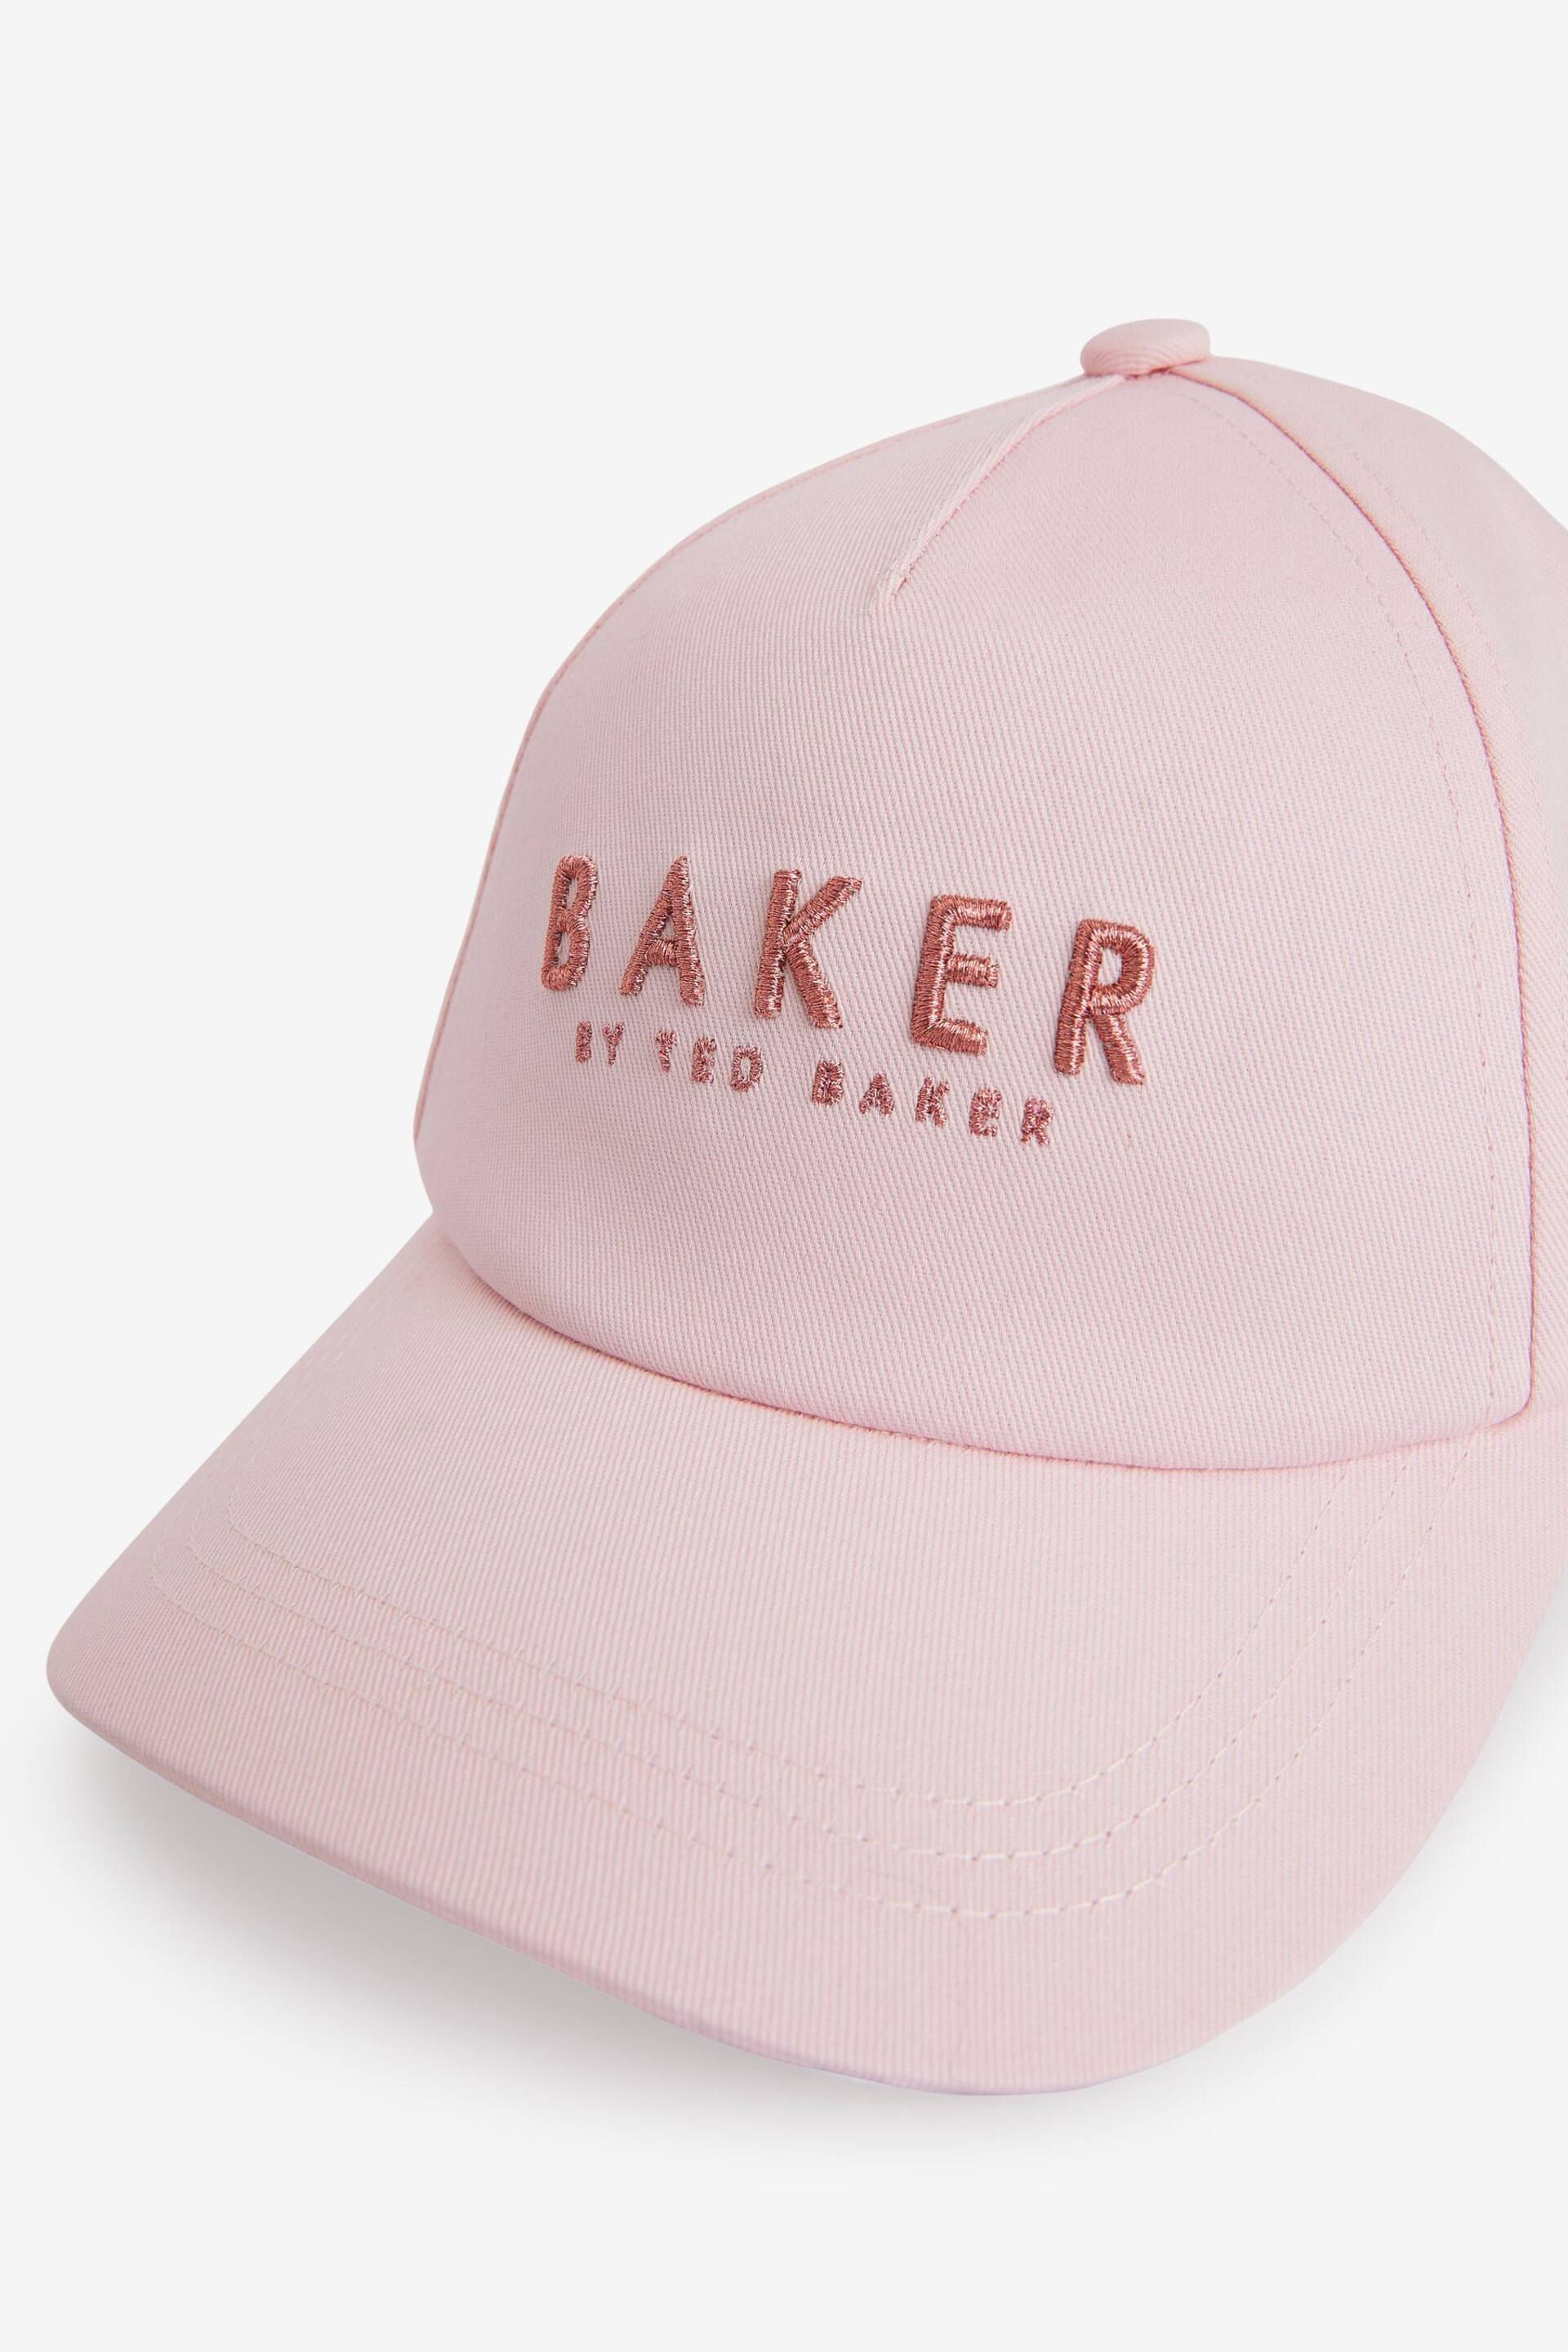 Baker by Ted Baker Girls Pink Twill Baseball Cap - Image 2 of 5